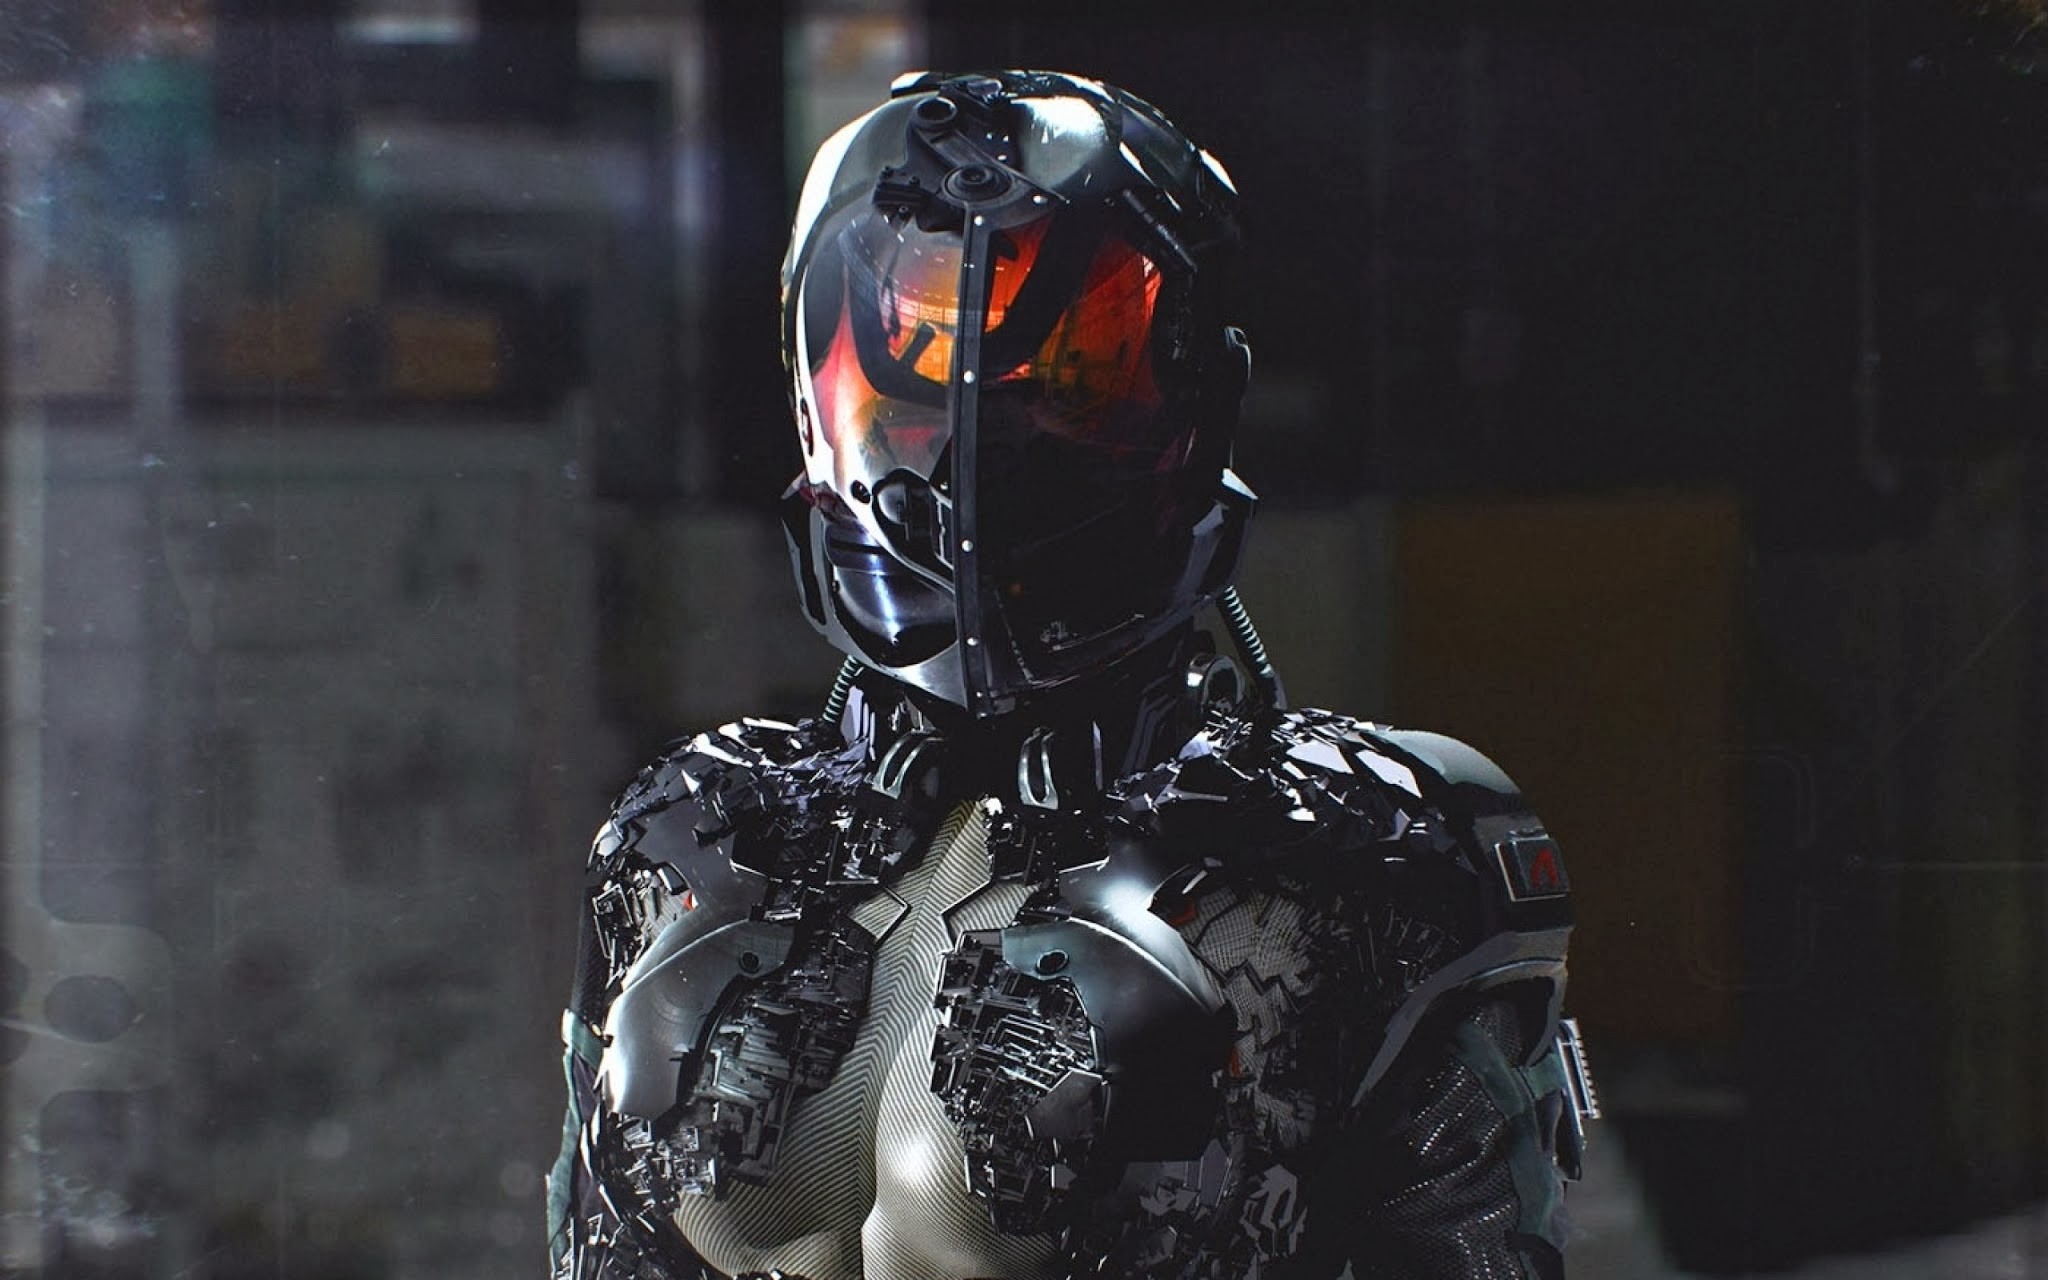 General 2048x1280 cyberpunk science fiction robot futuristic digital art